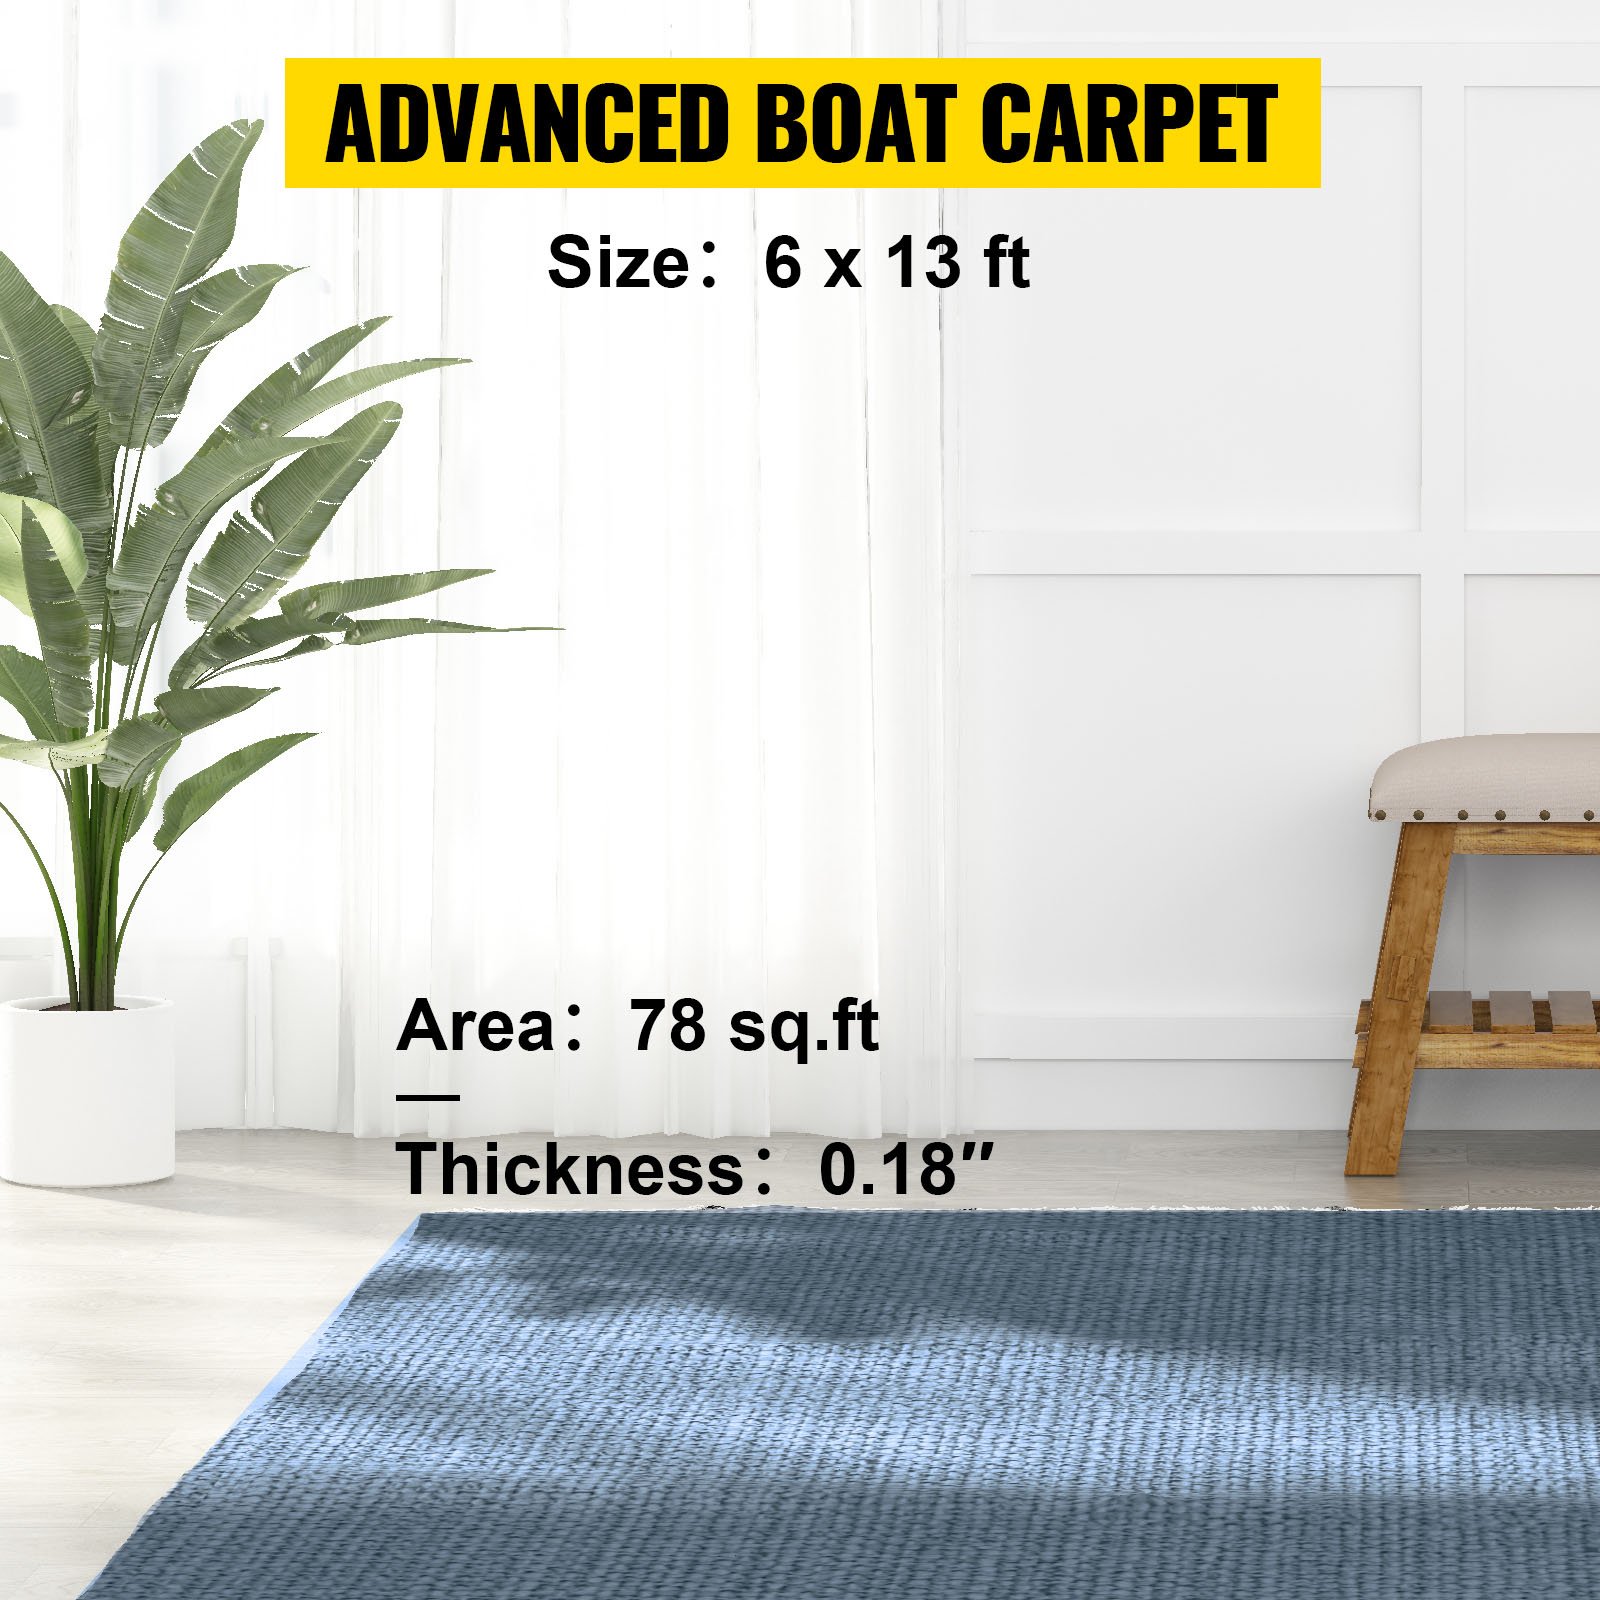 Boat Carpet 6X13' Indoor Outdoor Marine Carpet Rug Waterproof Anti